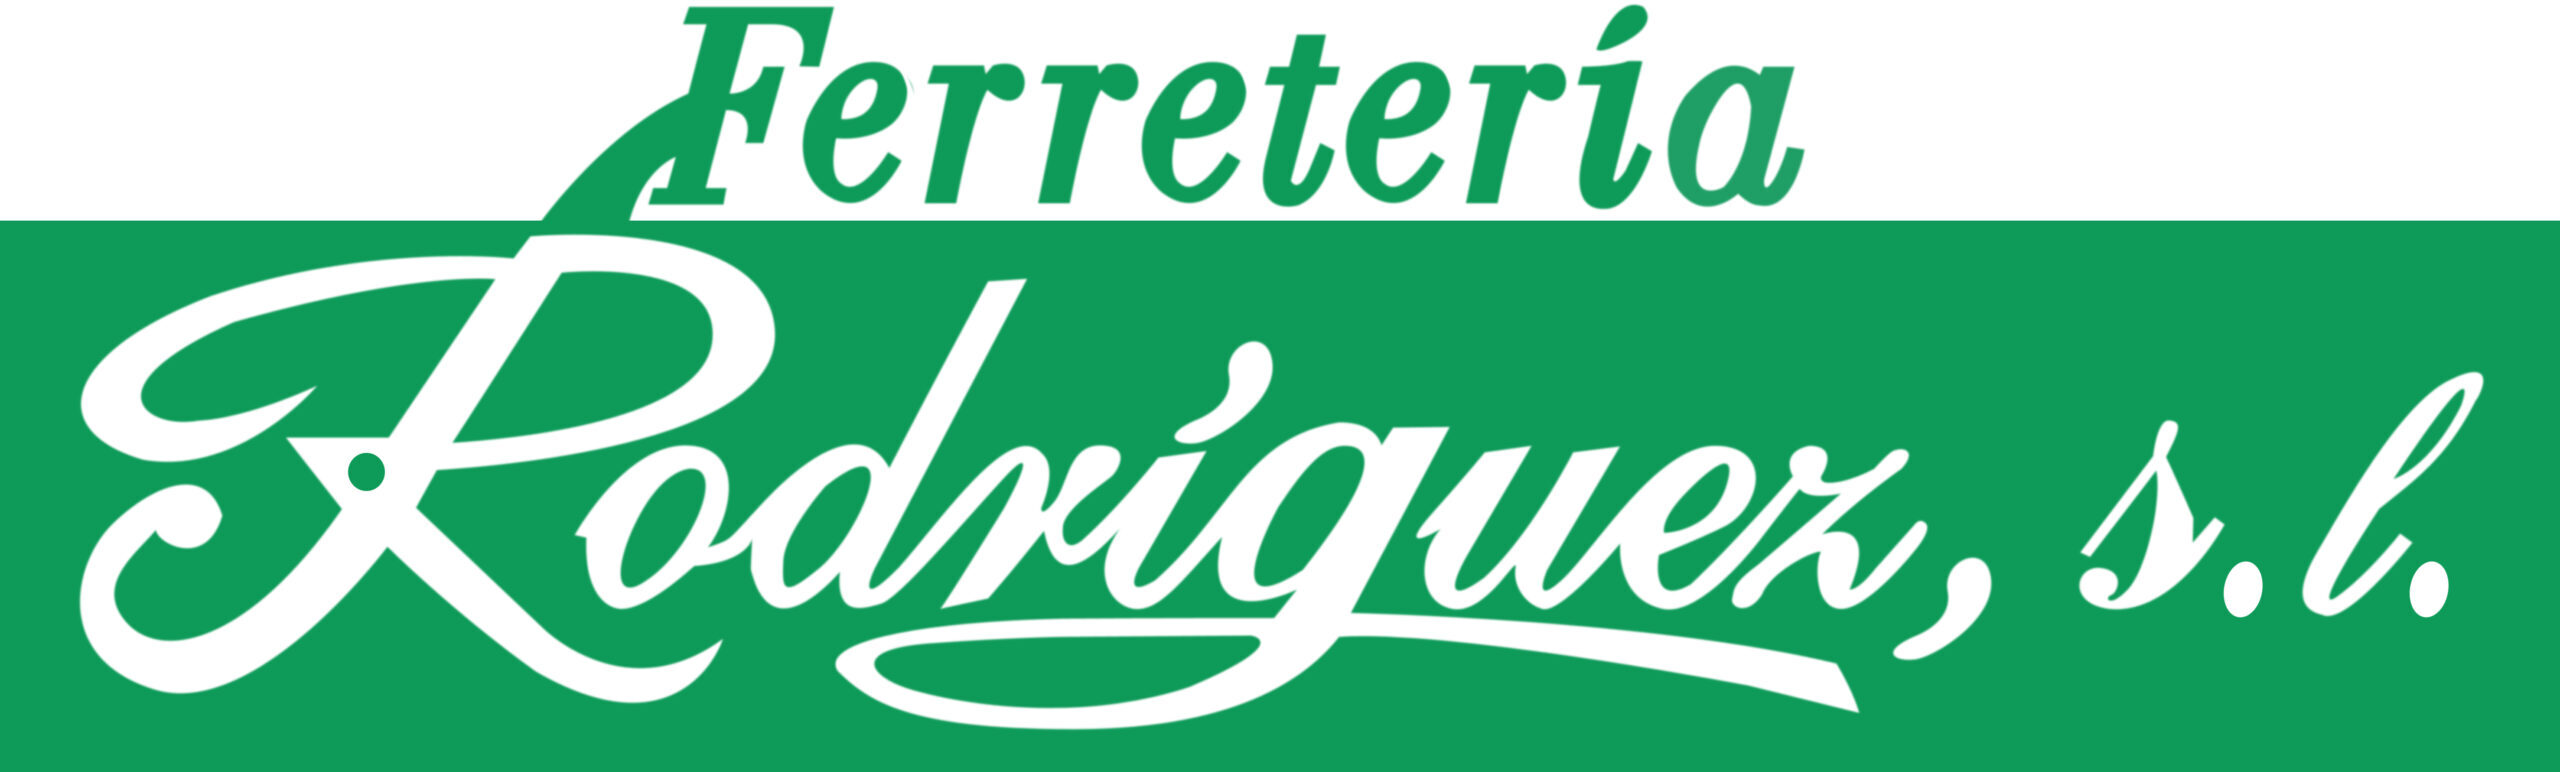 Ferreteria Rodriguez logo